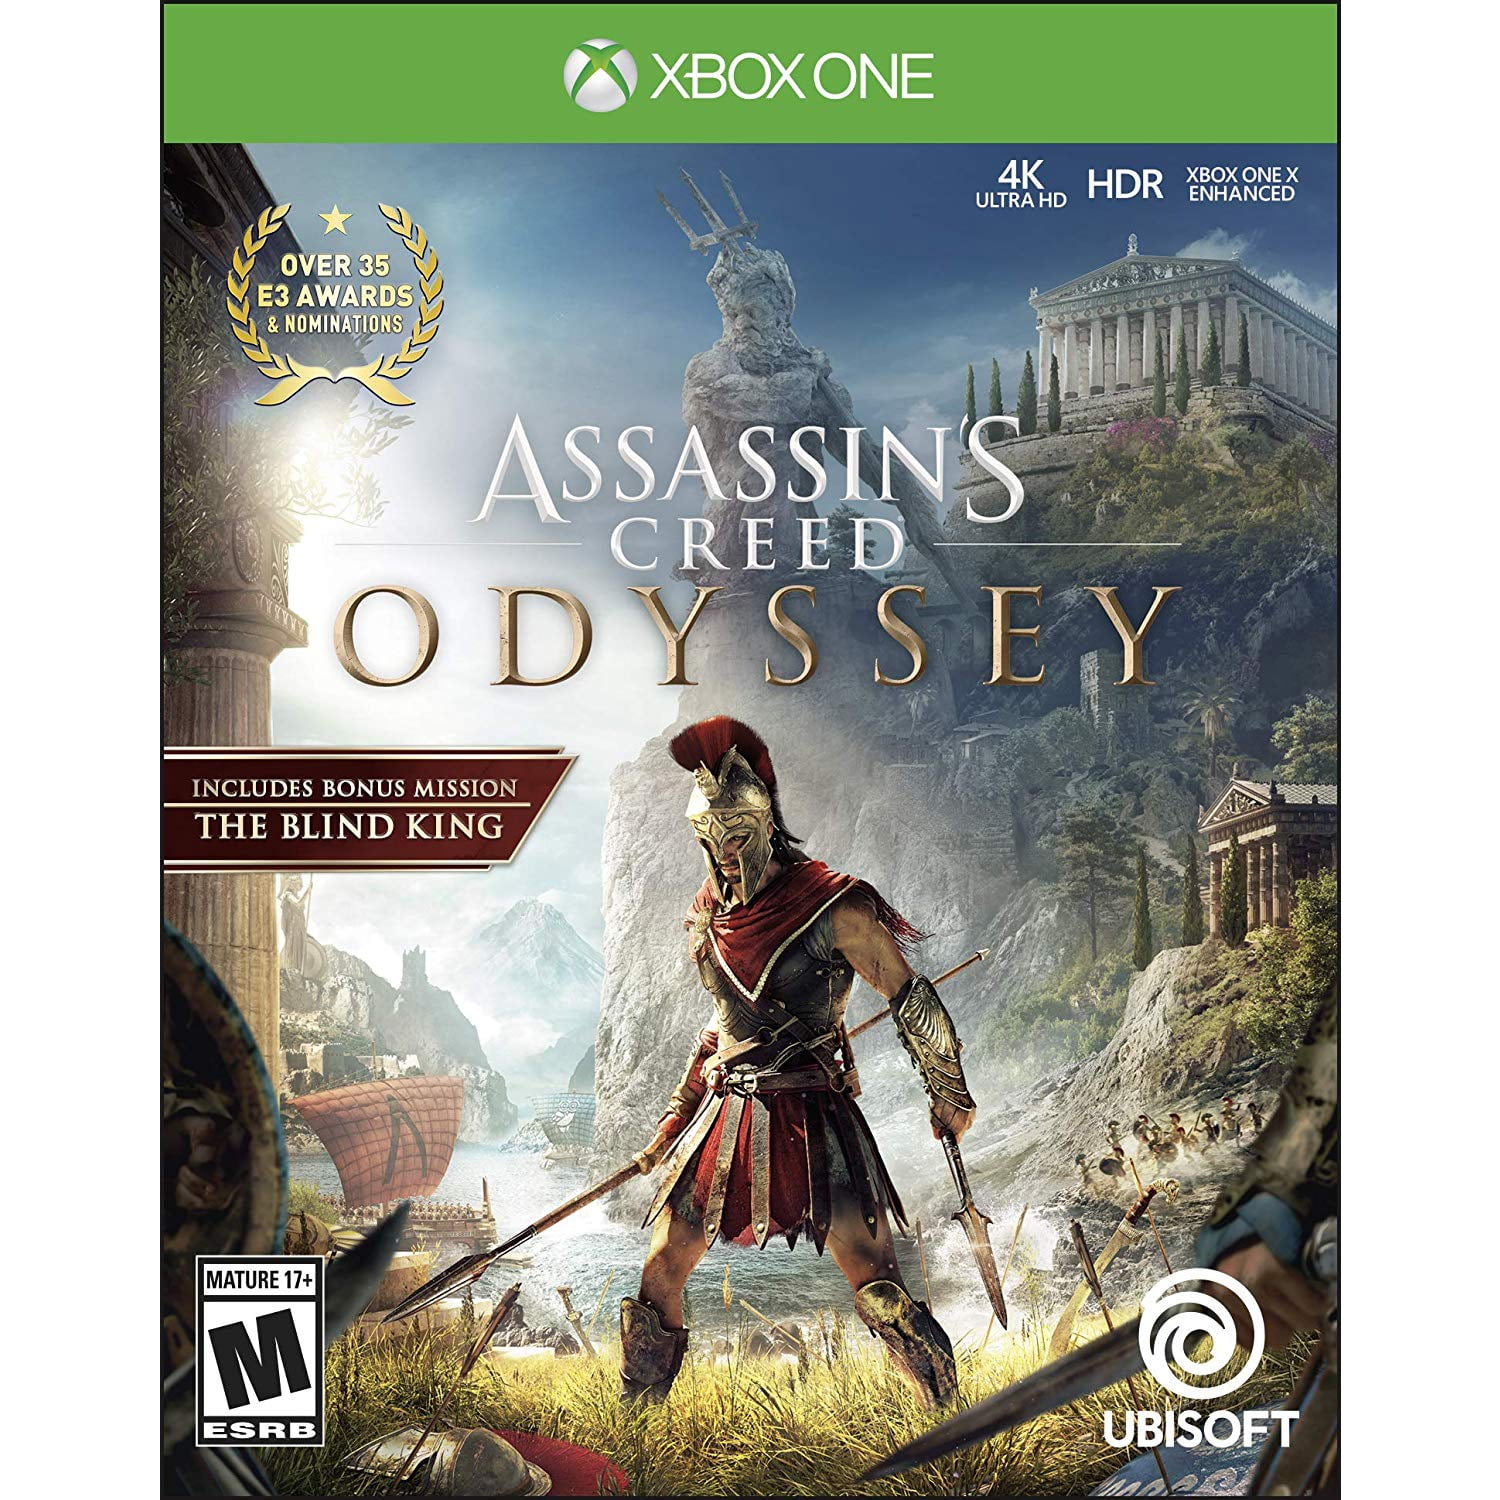 Assassin's Creed IV Black Flag Standard Edition Ubisoft Xbox One Digital